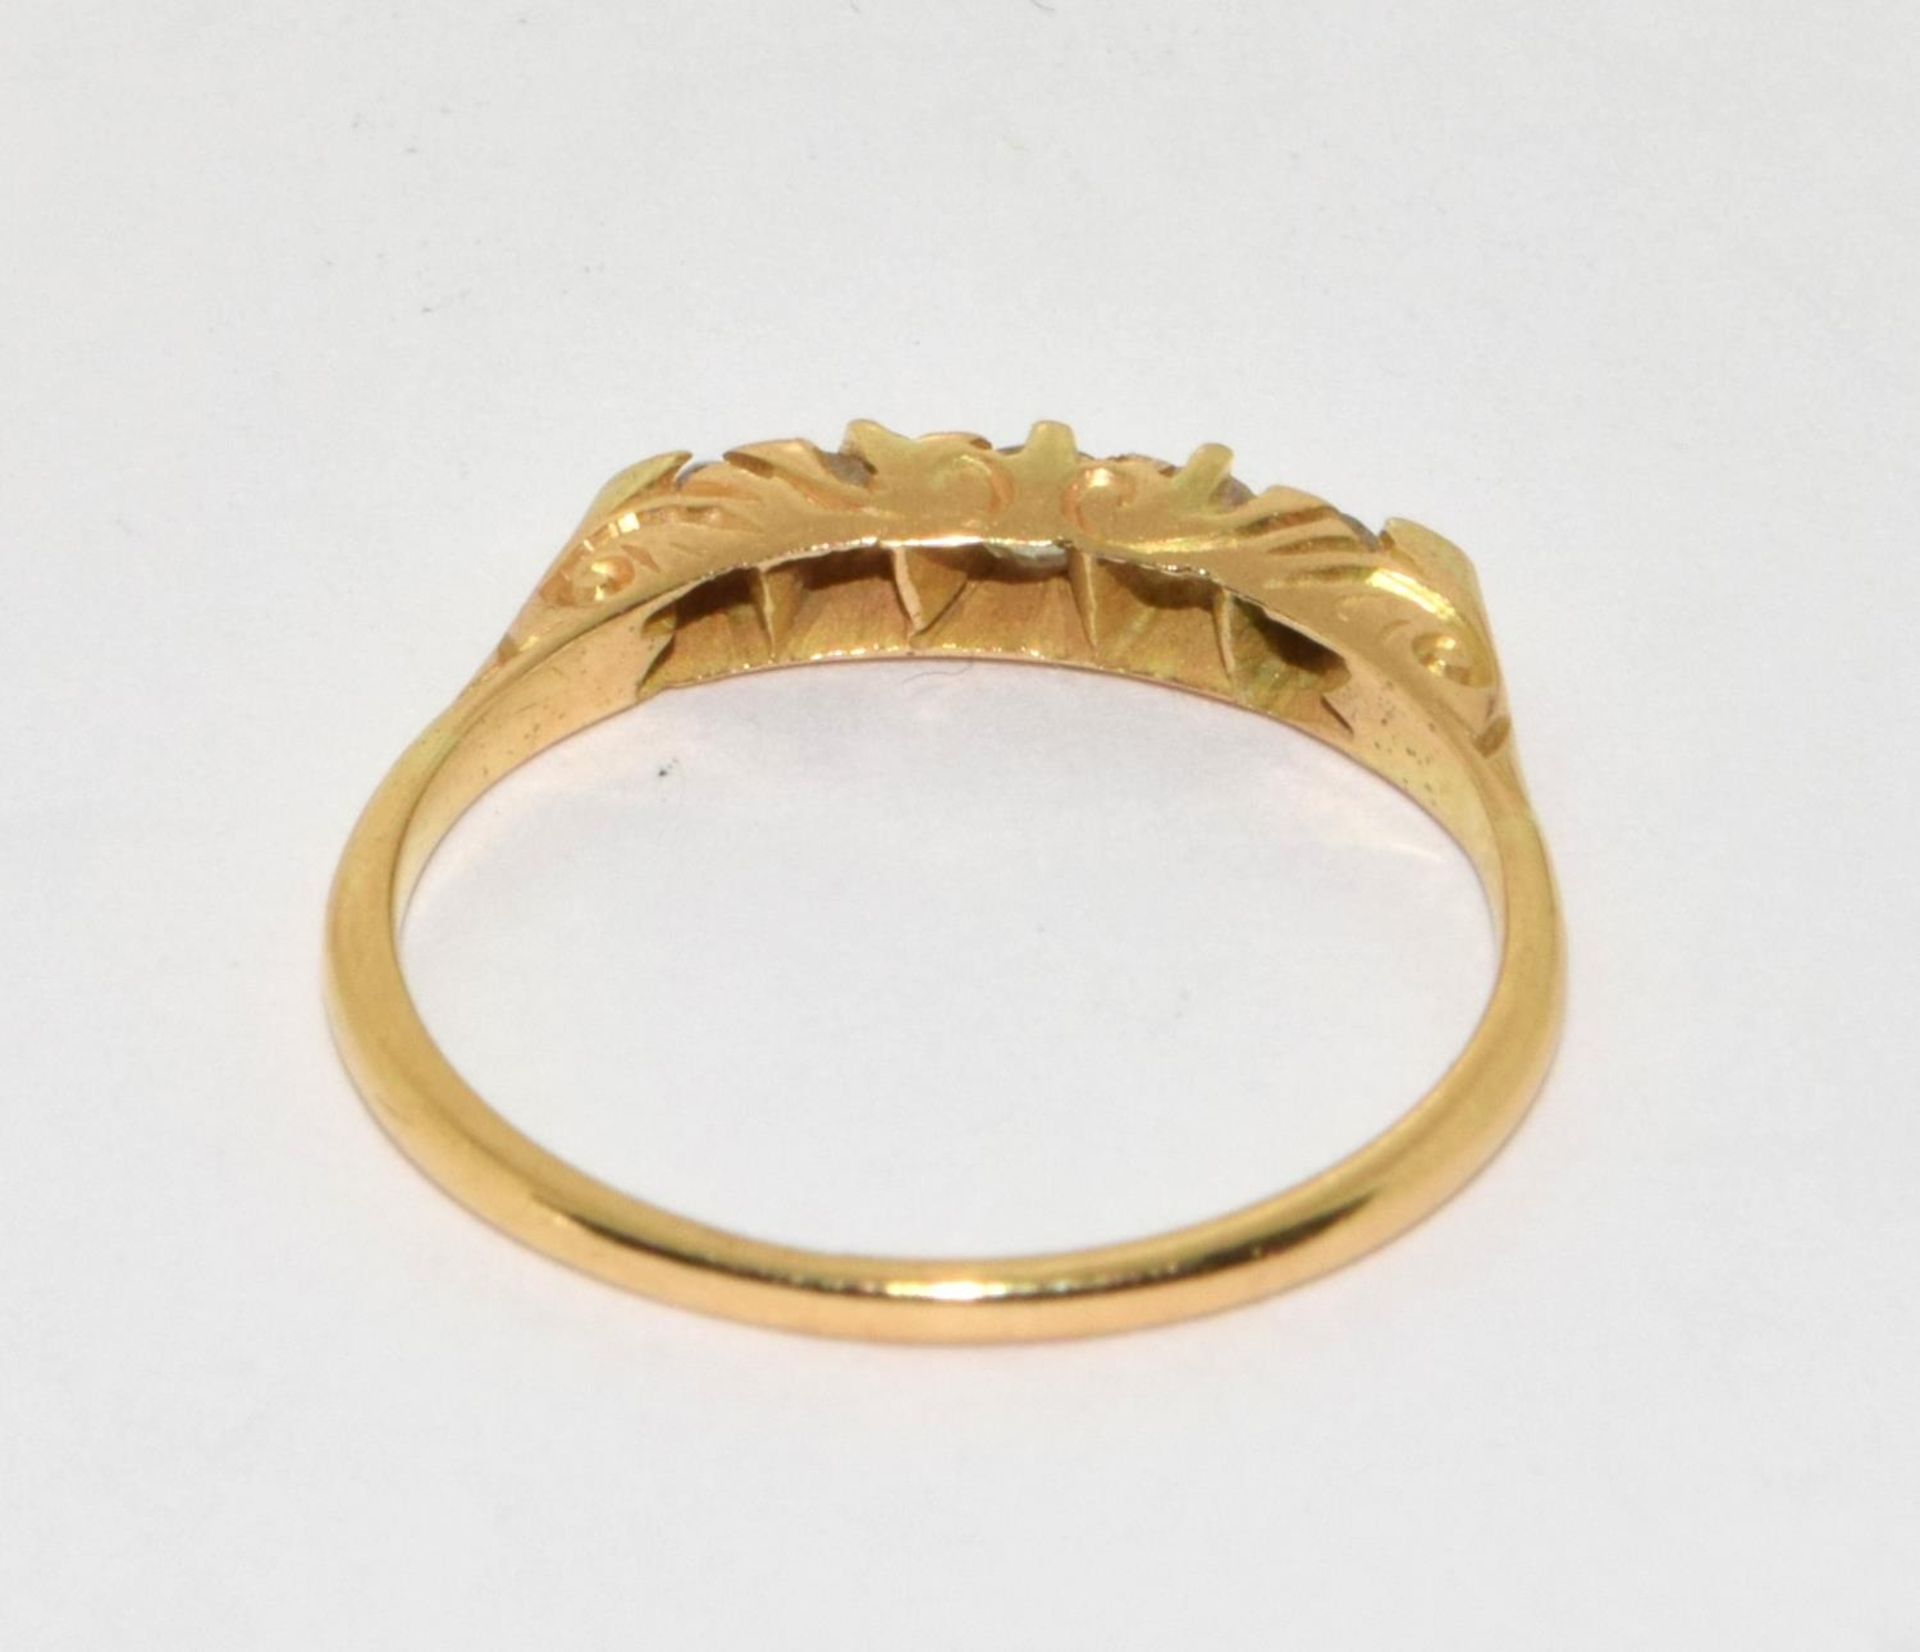 18ct gold antique set 5 stone ladies diamond ring 3g size N - Image 3 of 6